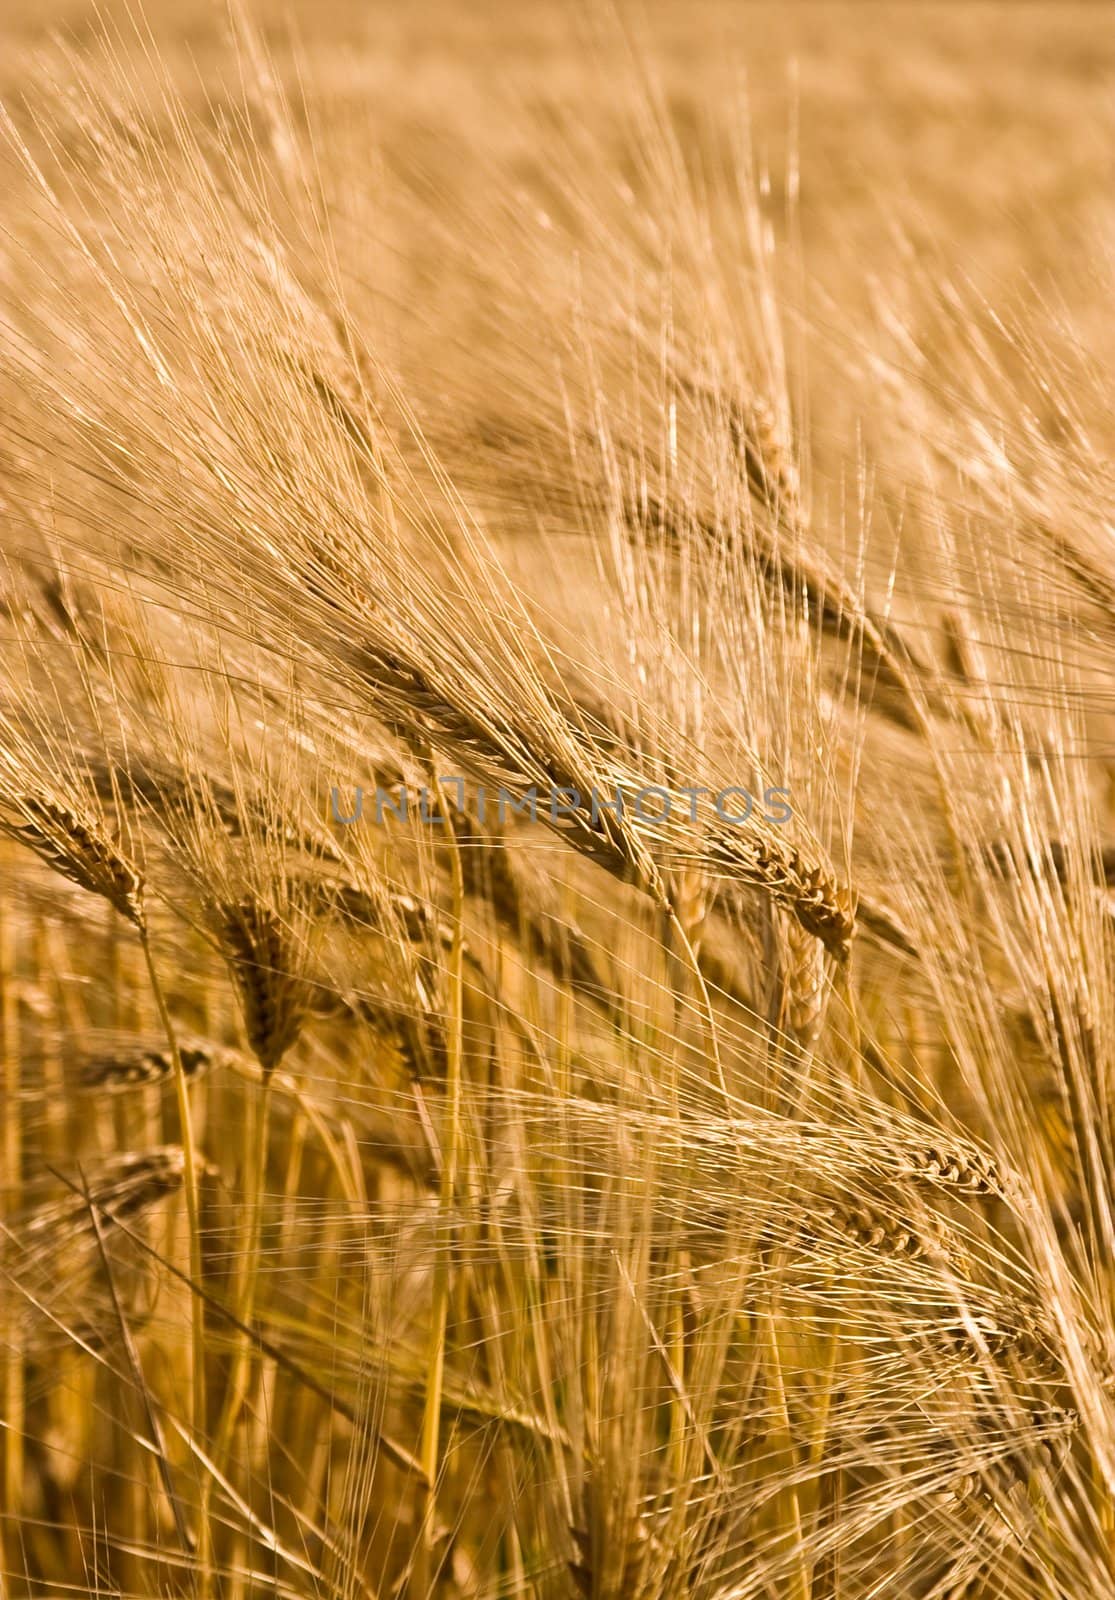 food series: ripe wheat field in summer